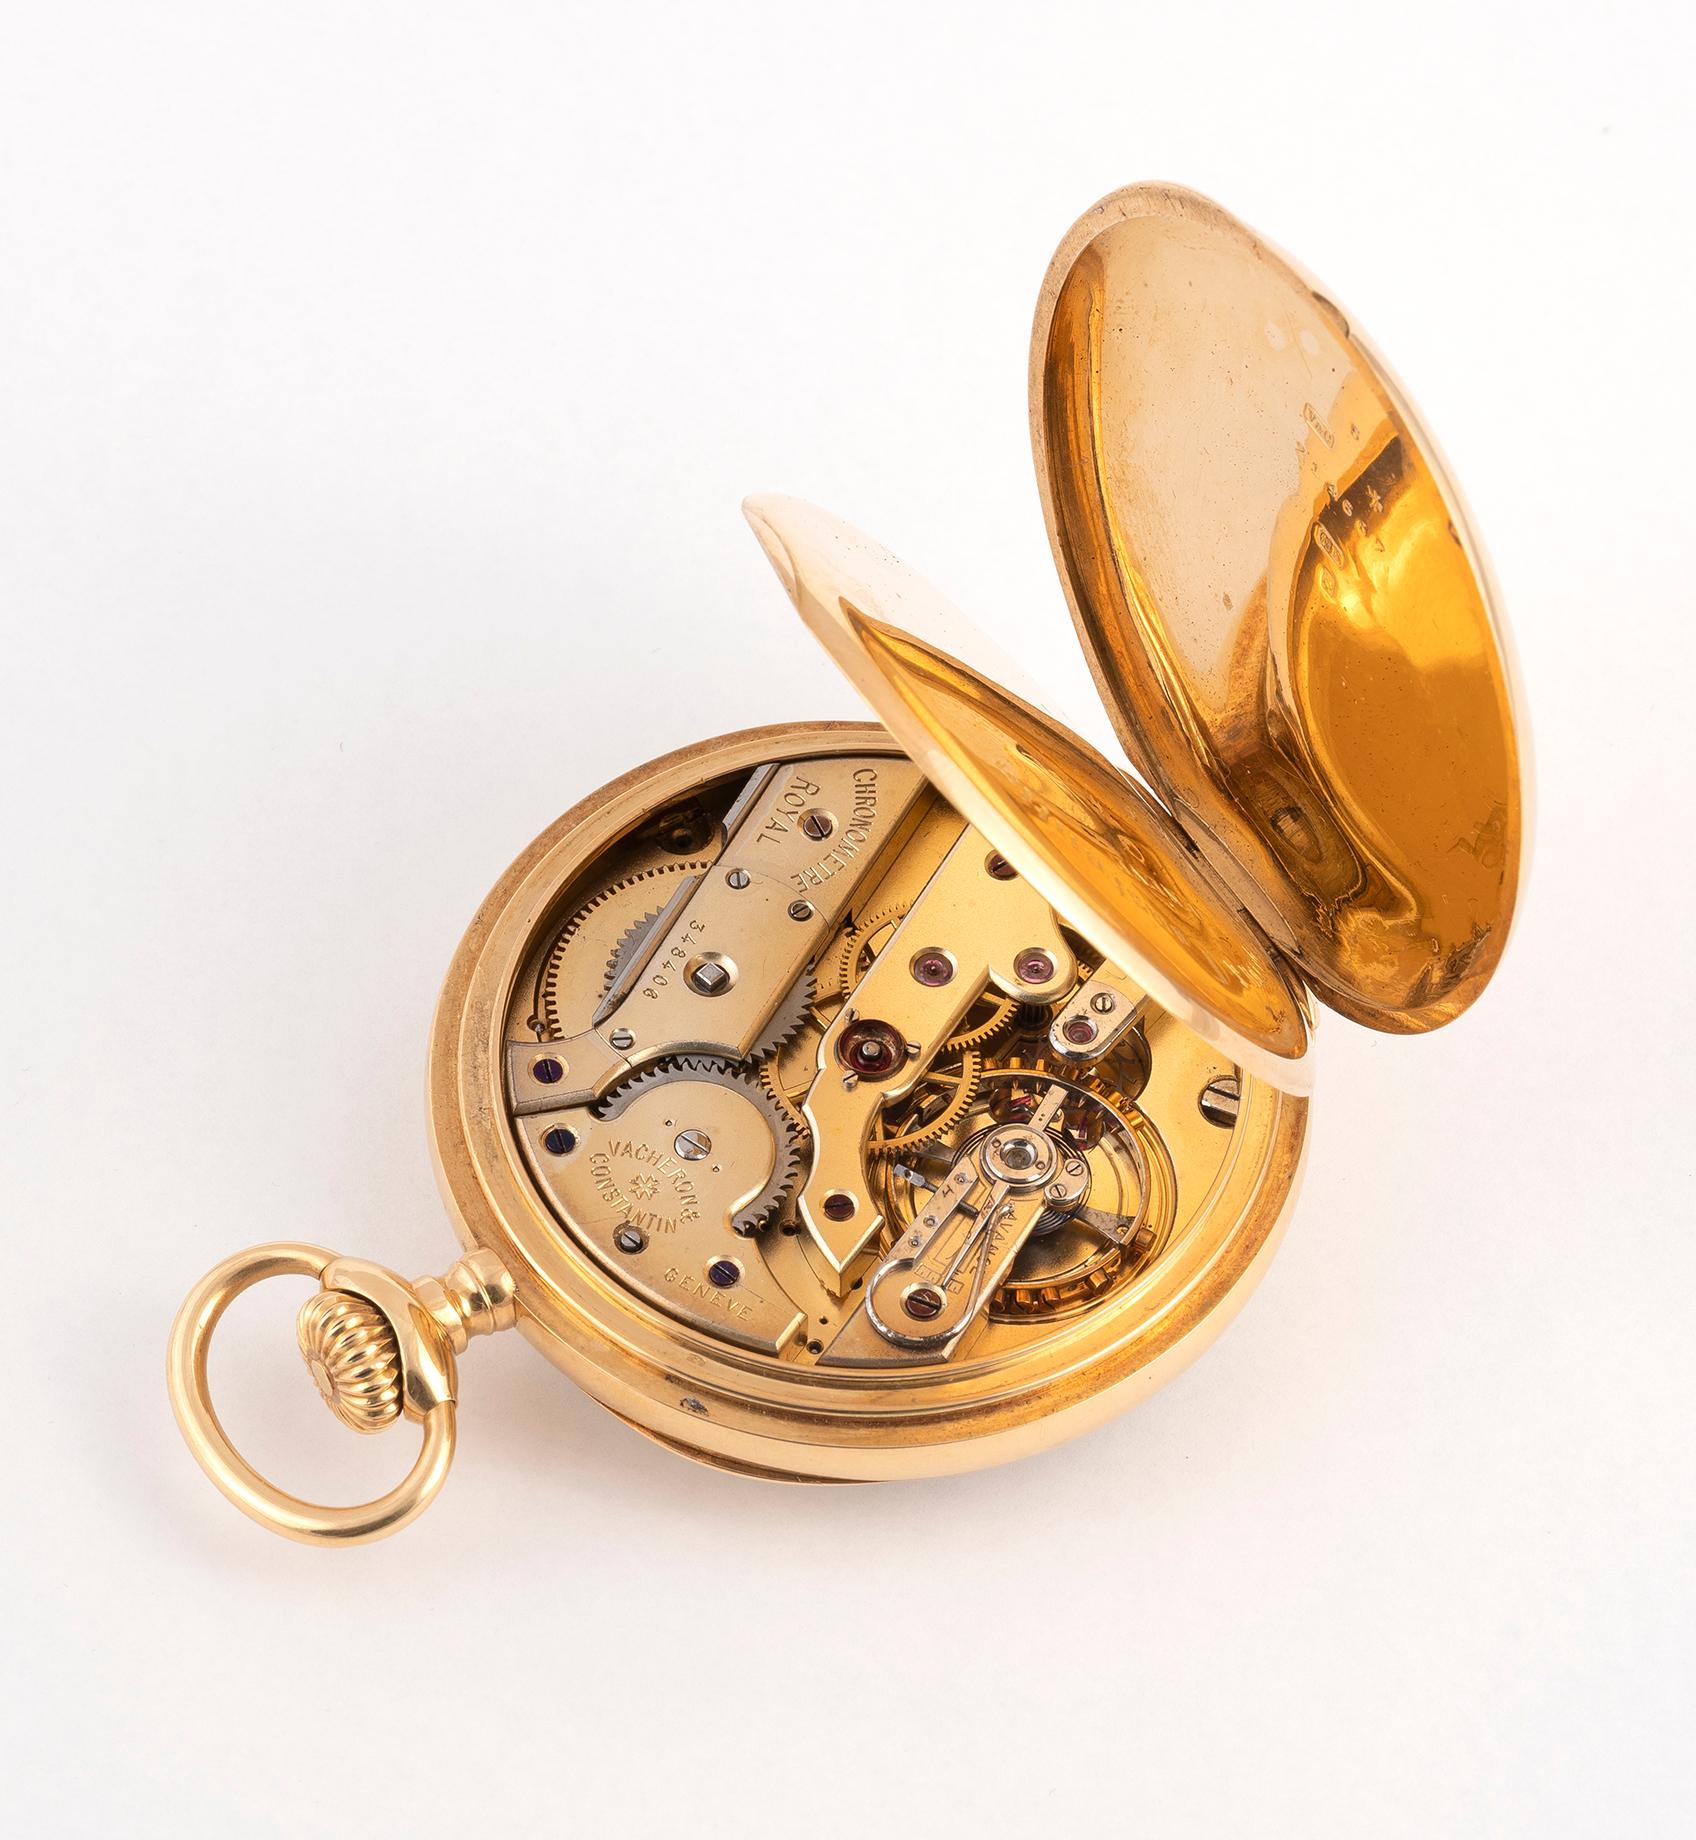 Art Nouveau Vacheron Constantin, a Fine and Large Yellow Gold Open Face Keyless Pocket Watch